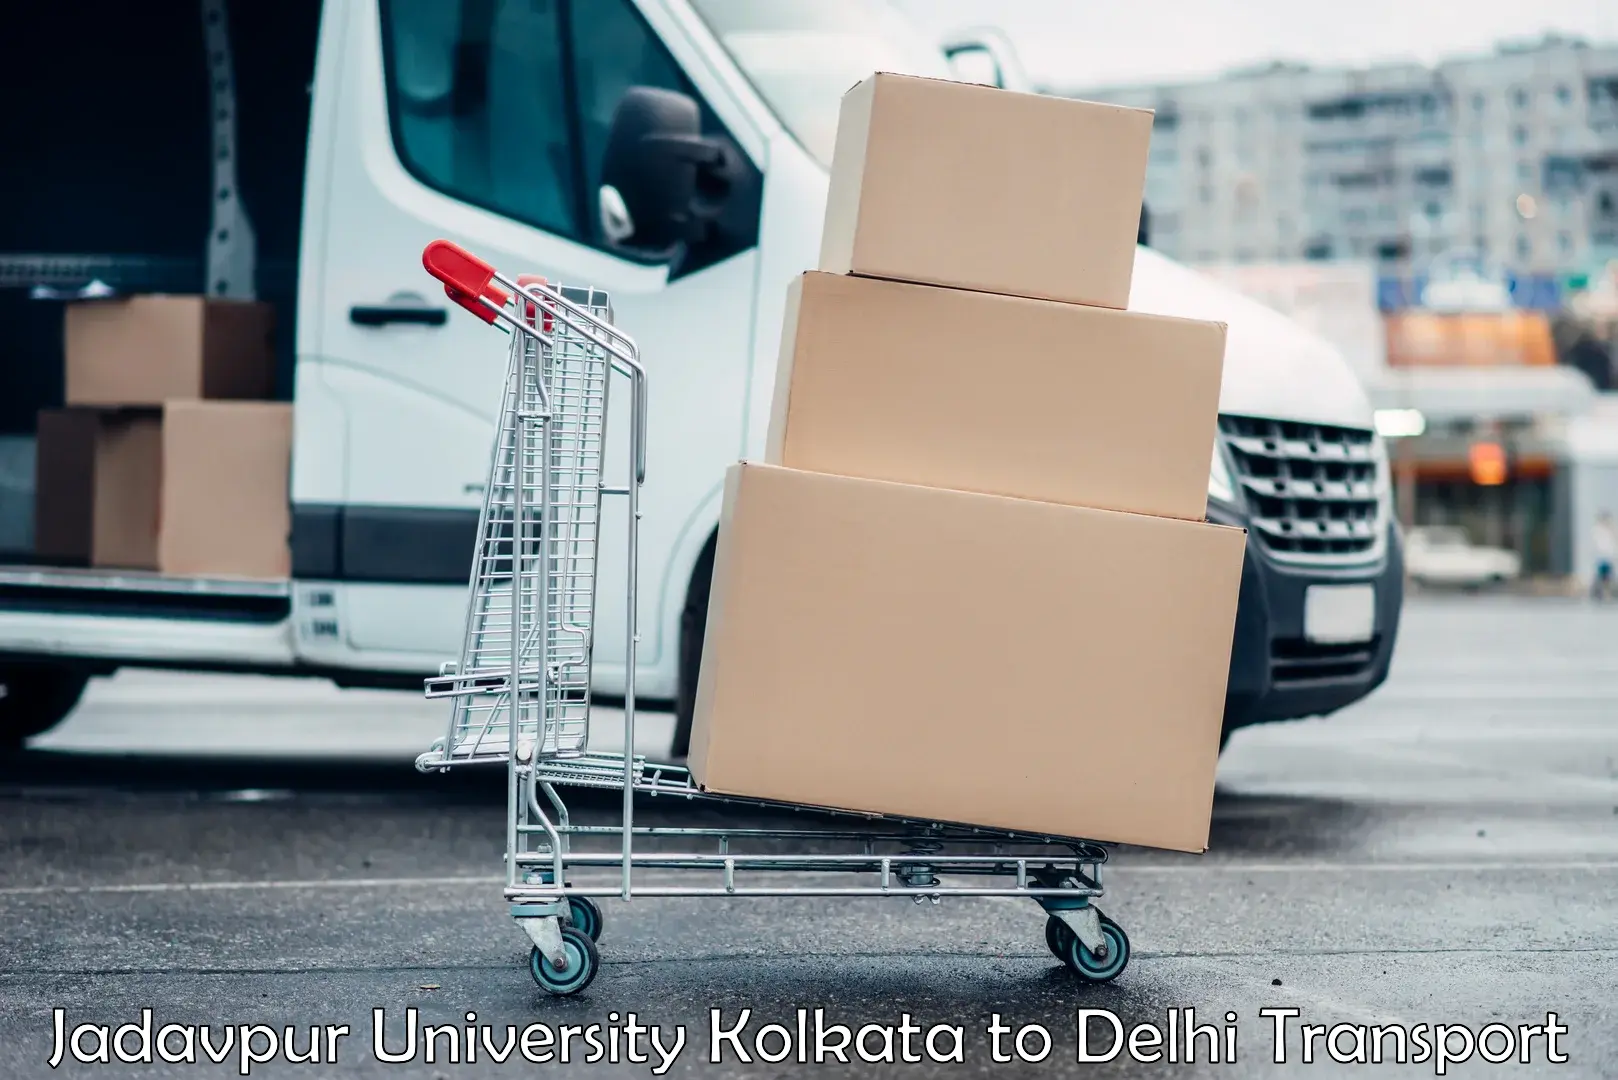 Container transport service Jadavpur University Kolkata to East Delhi